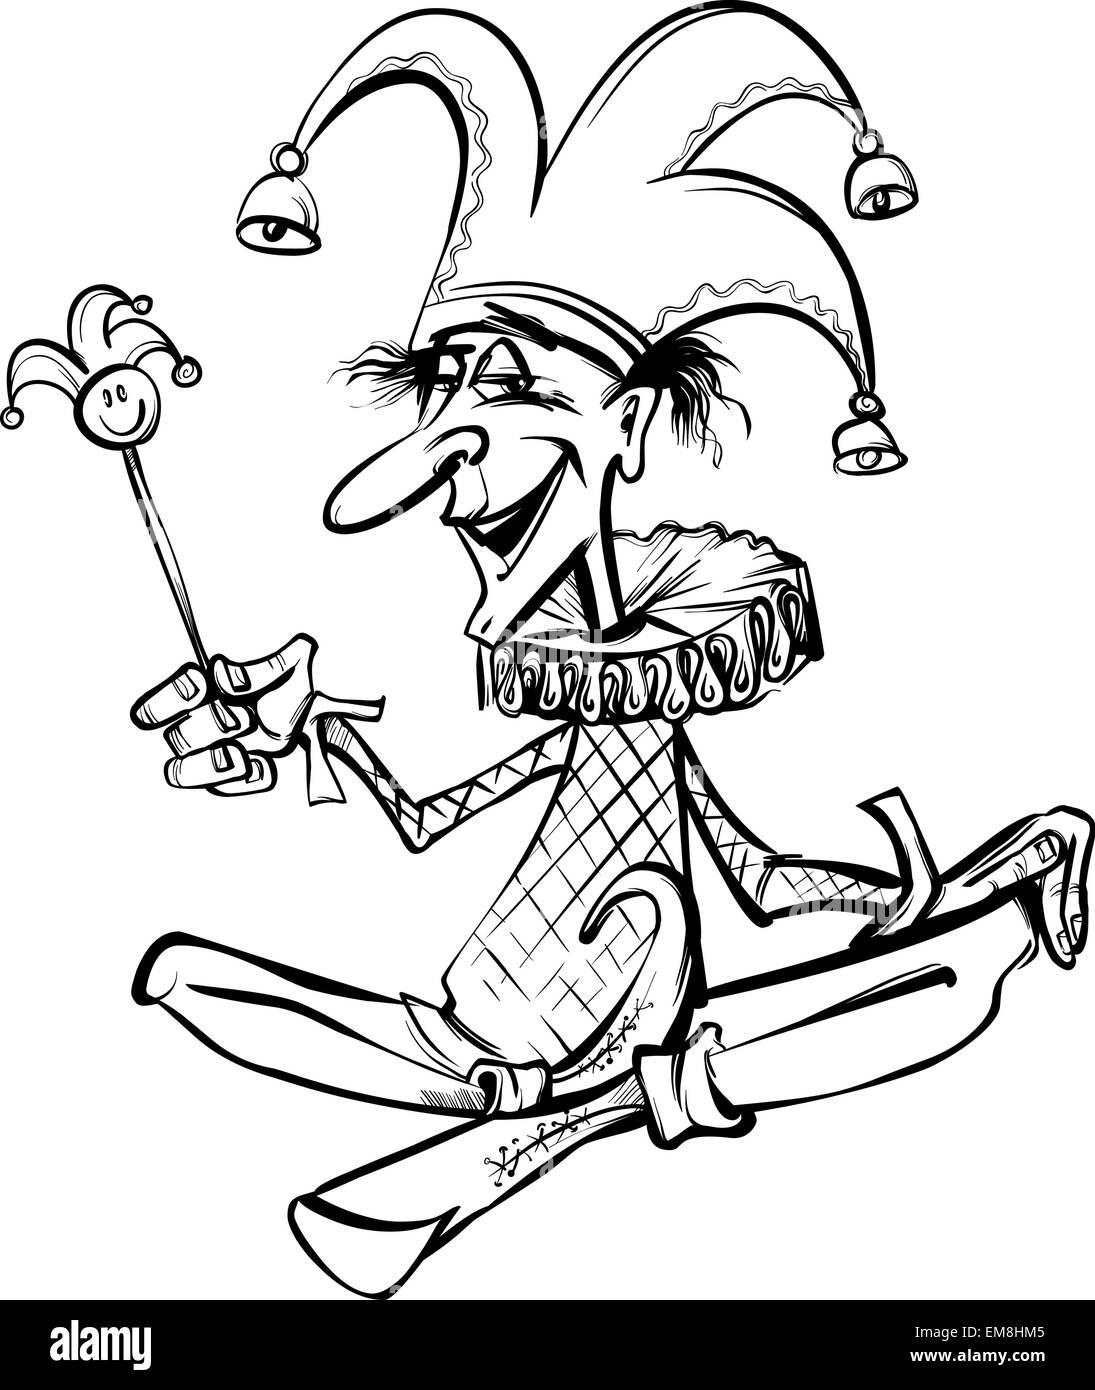 jester or joker cartoon illustration Stock Vector Image & Art - Alamy